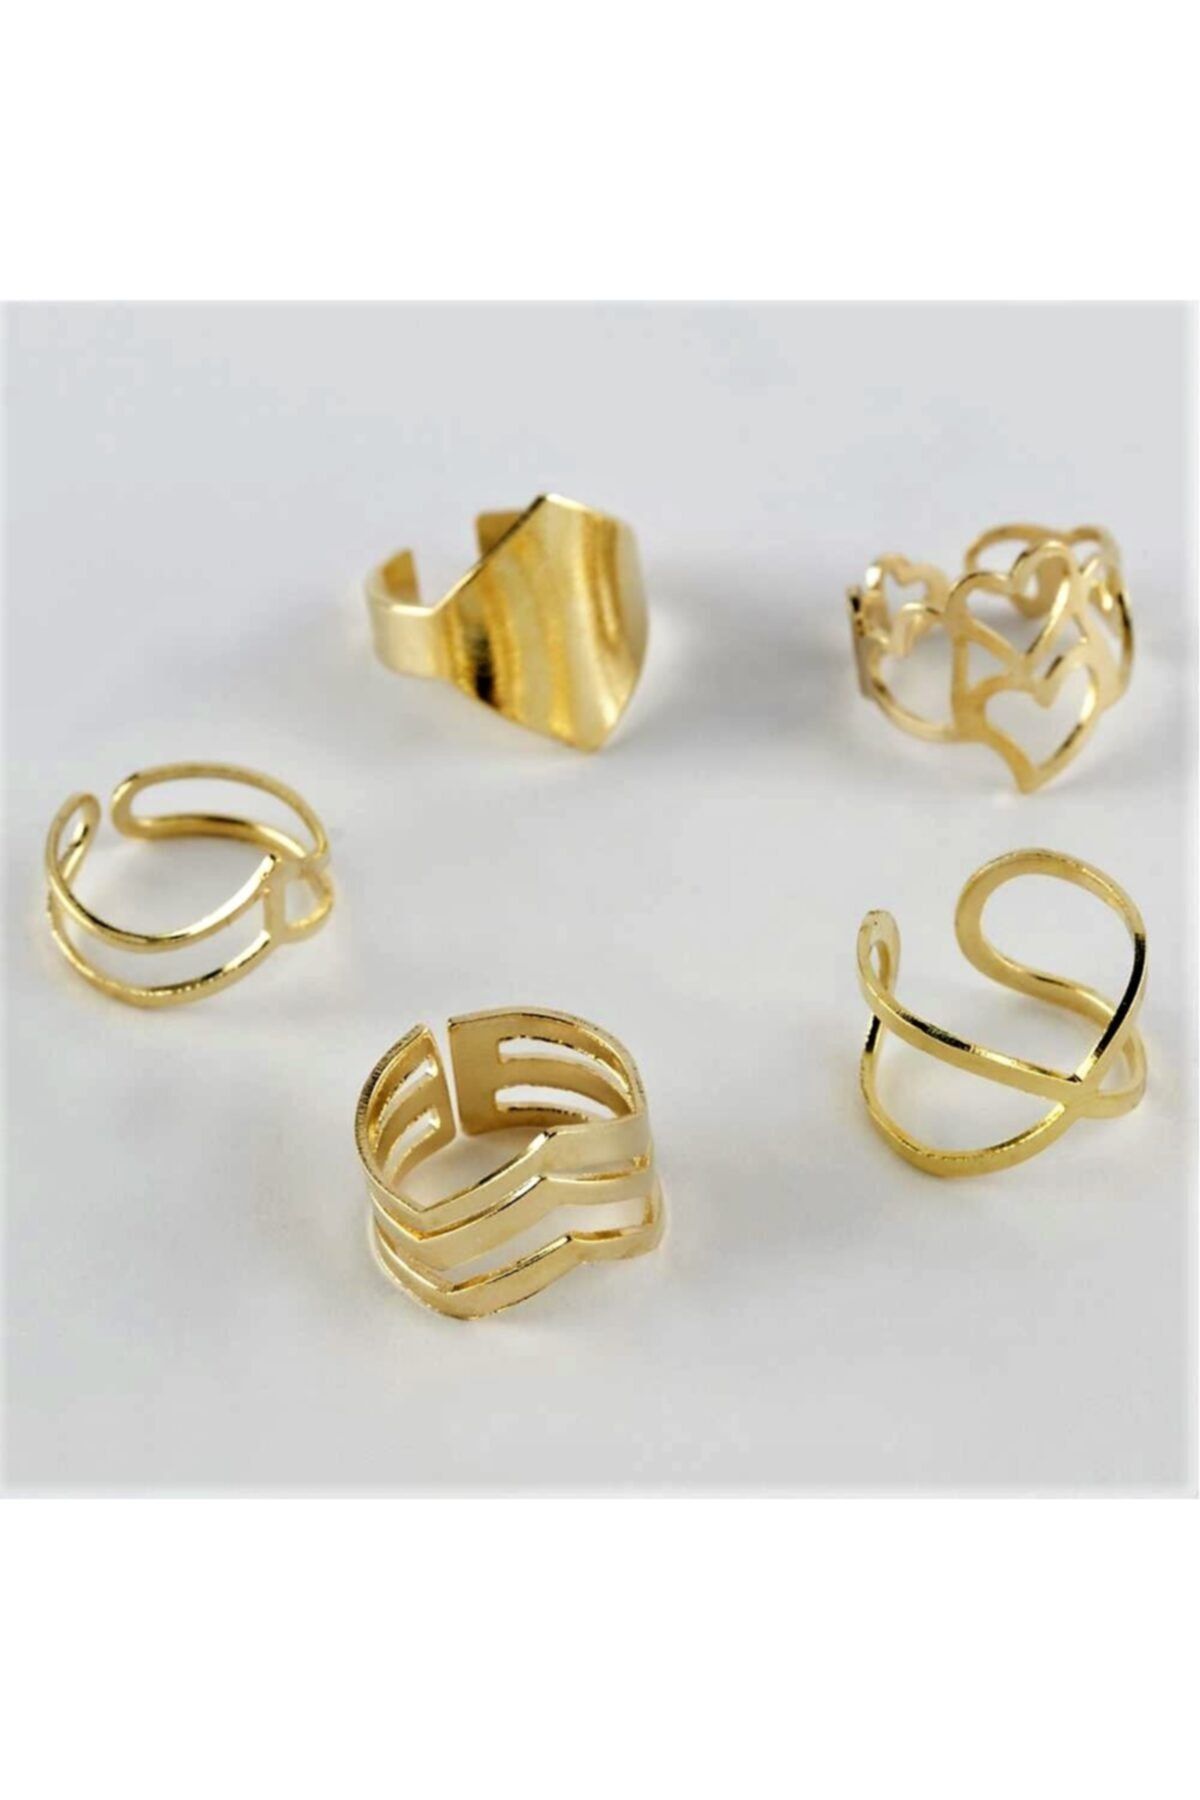 One-Hope Fashion 5'li Altın Sarı Yüzük Seti - Eklem Yüzüğü Seti